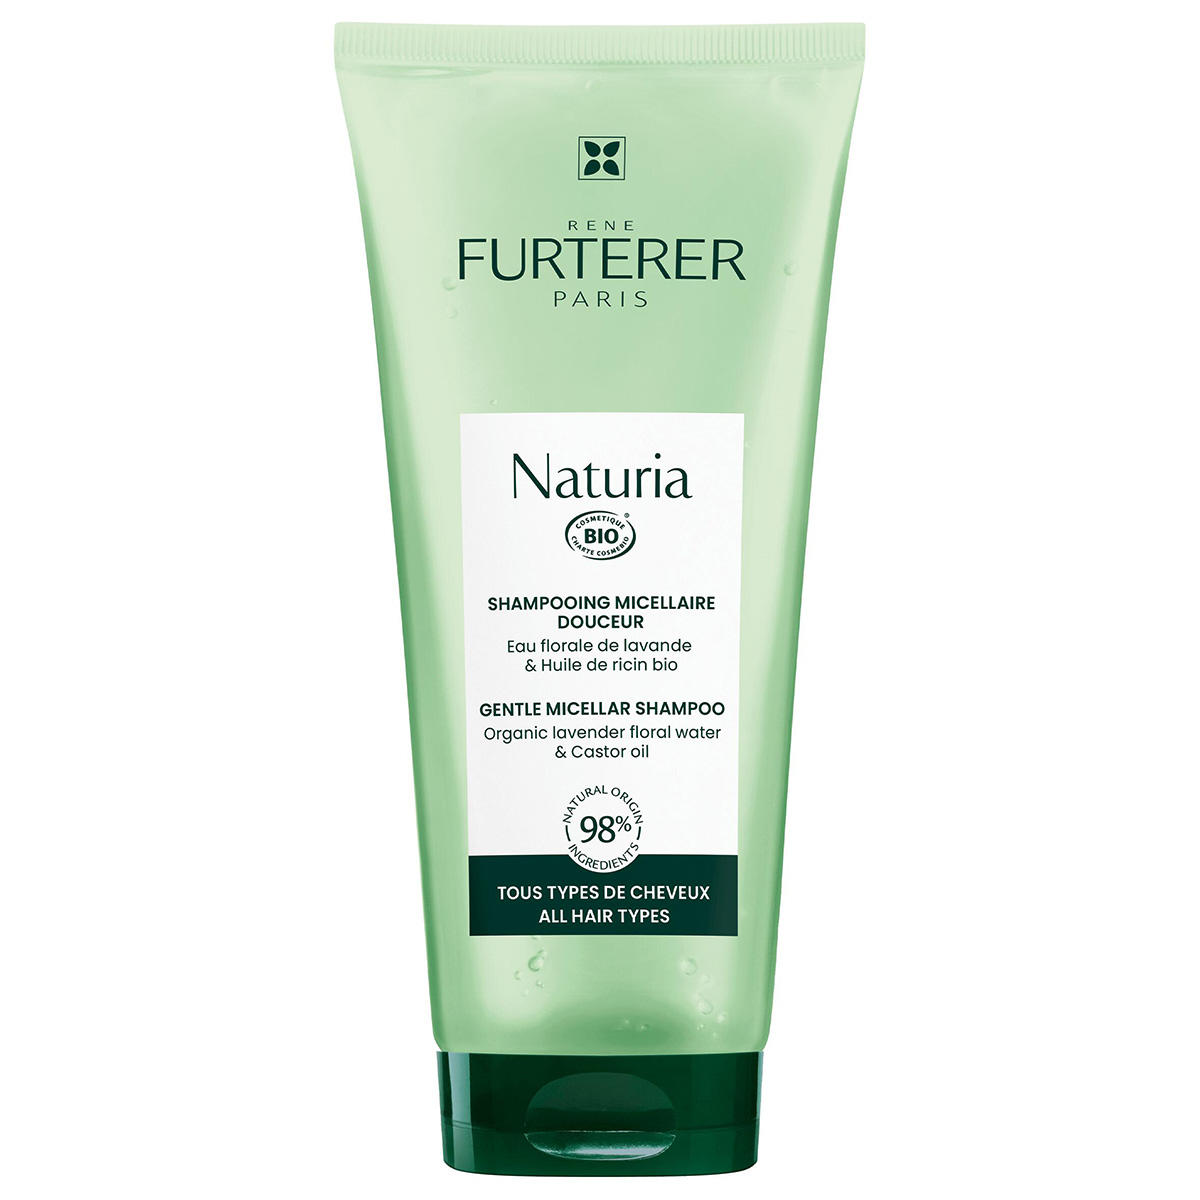 René Furterer Naturia Gentle micellar shampoo  - 1